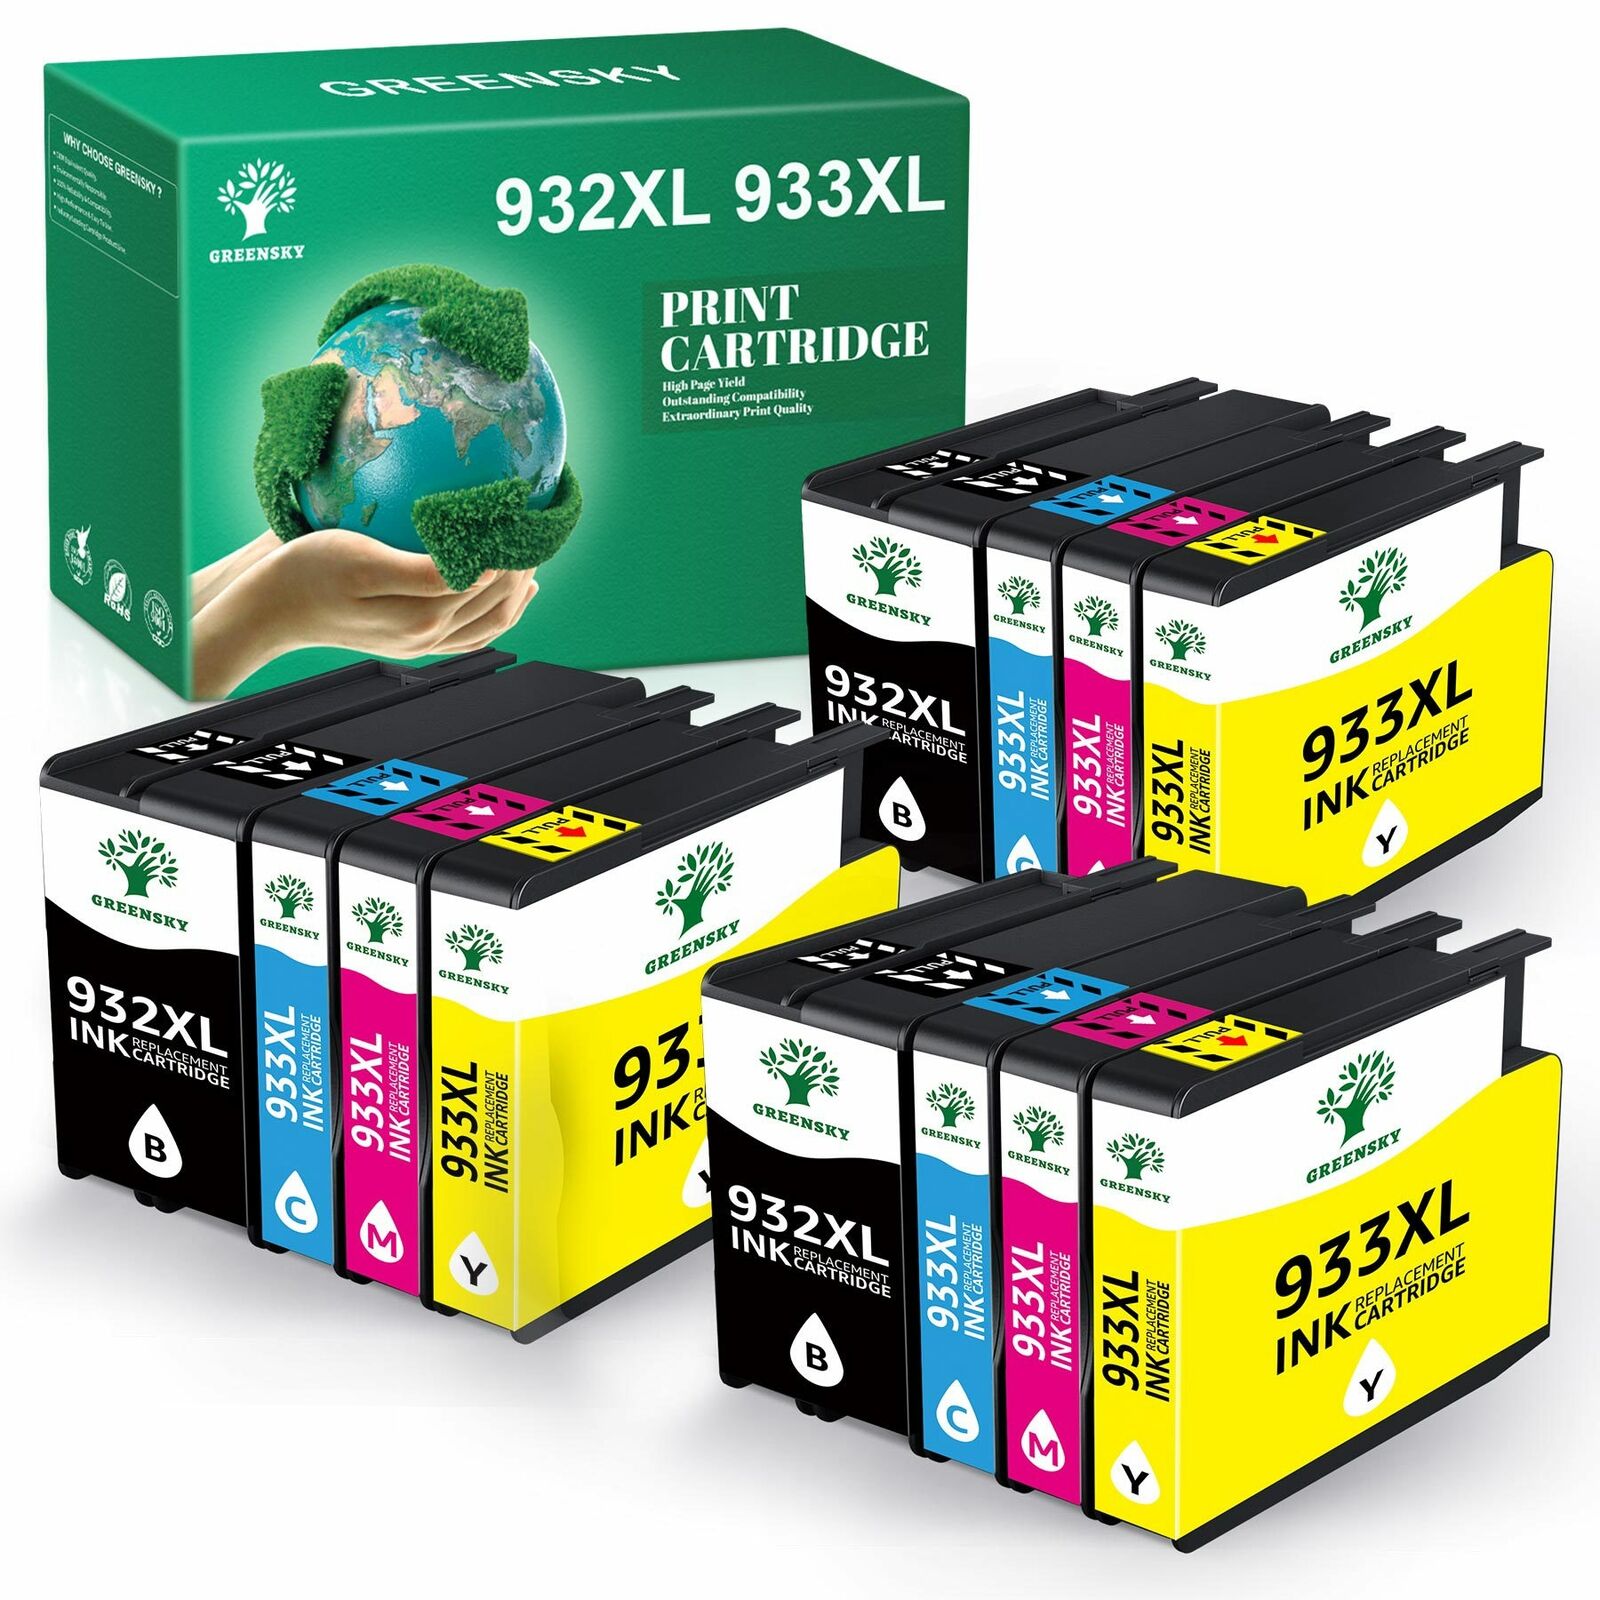 12Pack 932XL 933XL Ink Cartridges Set for HP OfficeJet 6700 6600 7100 7612 7610